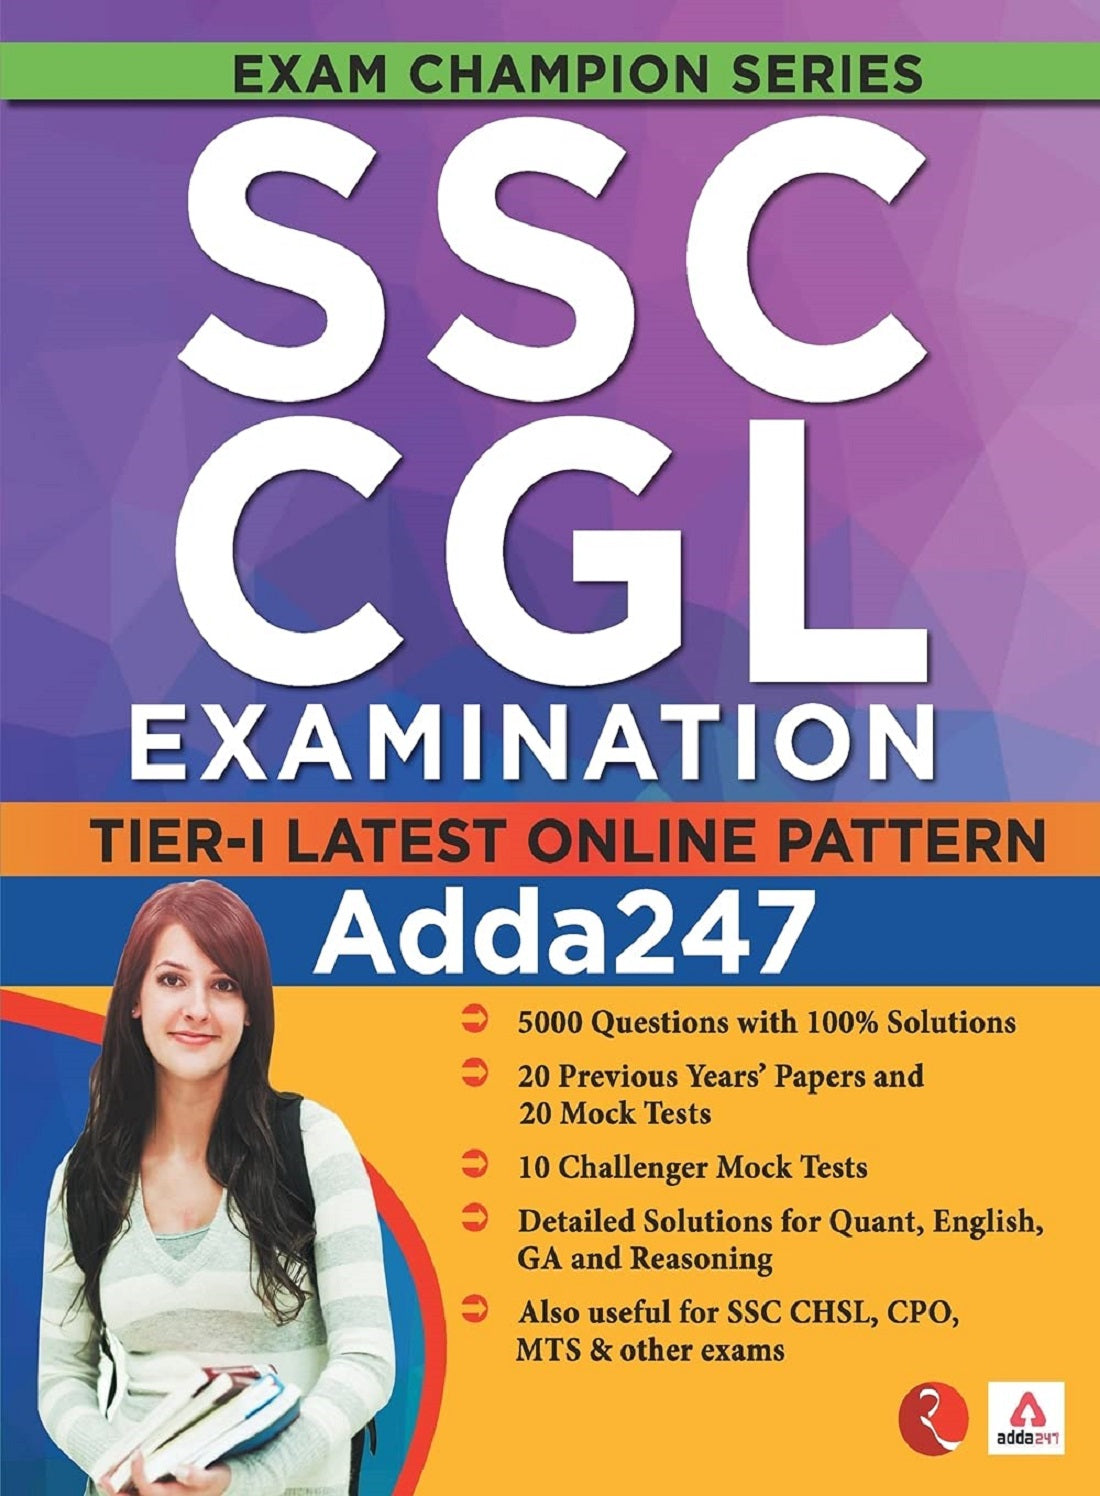 SSC CGL EXAMINATION TIER-I LATEST ONLINE PATTERN